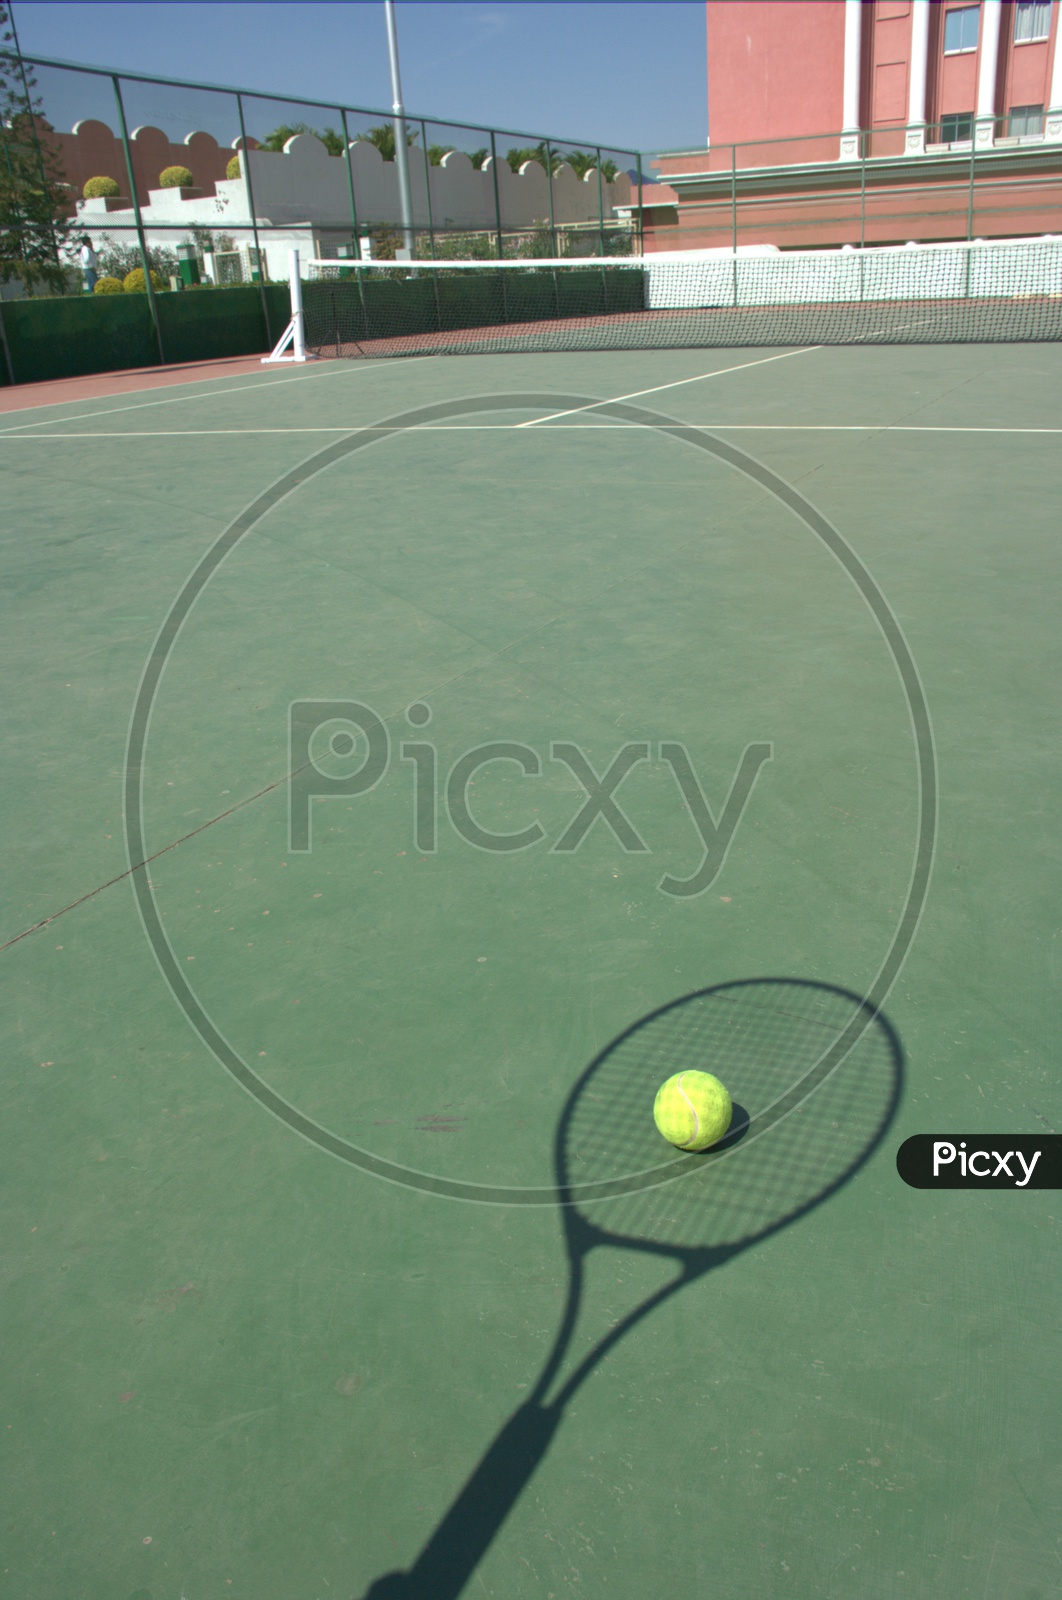 Tennis ball in a court